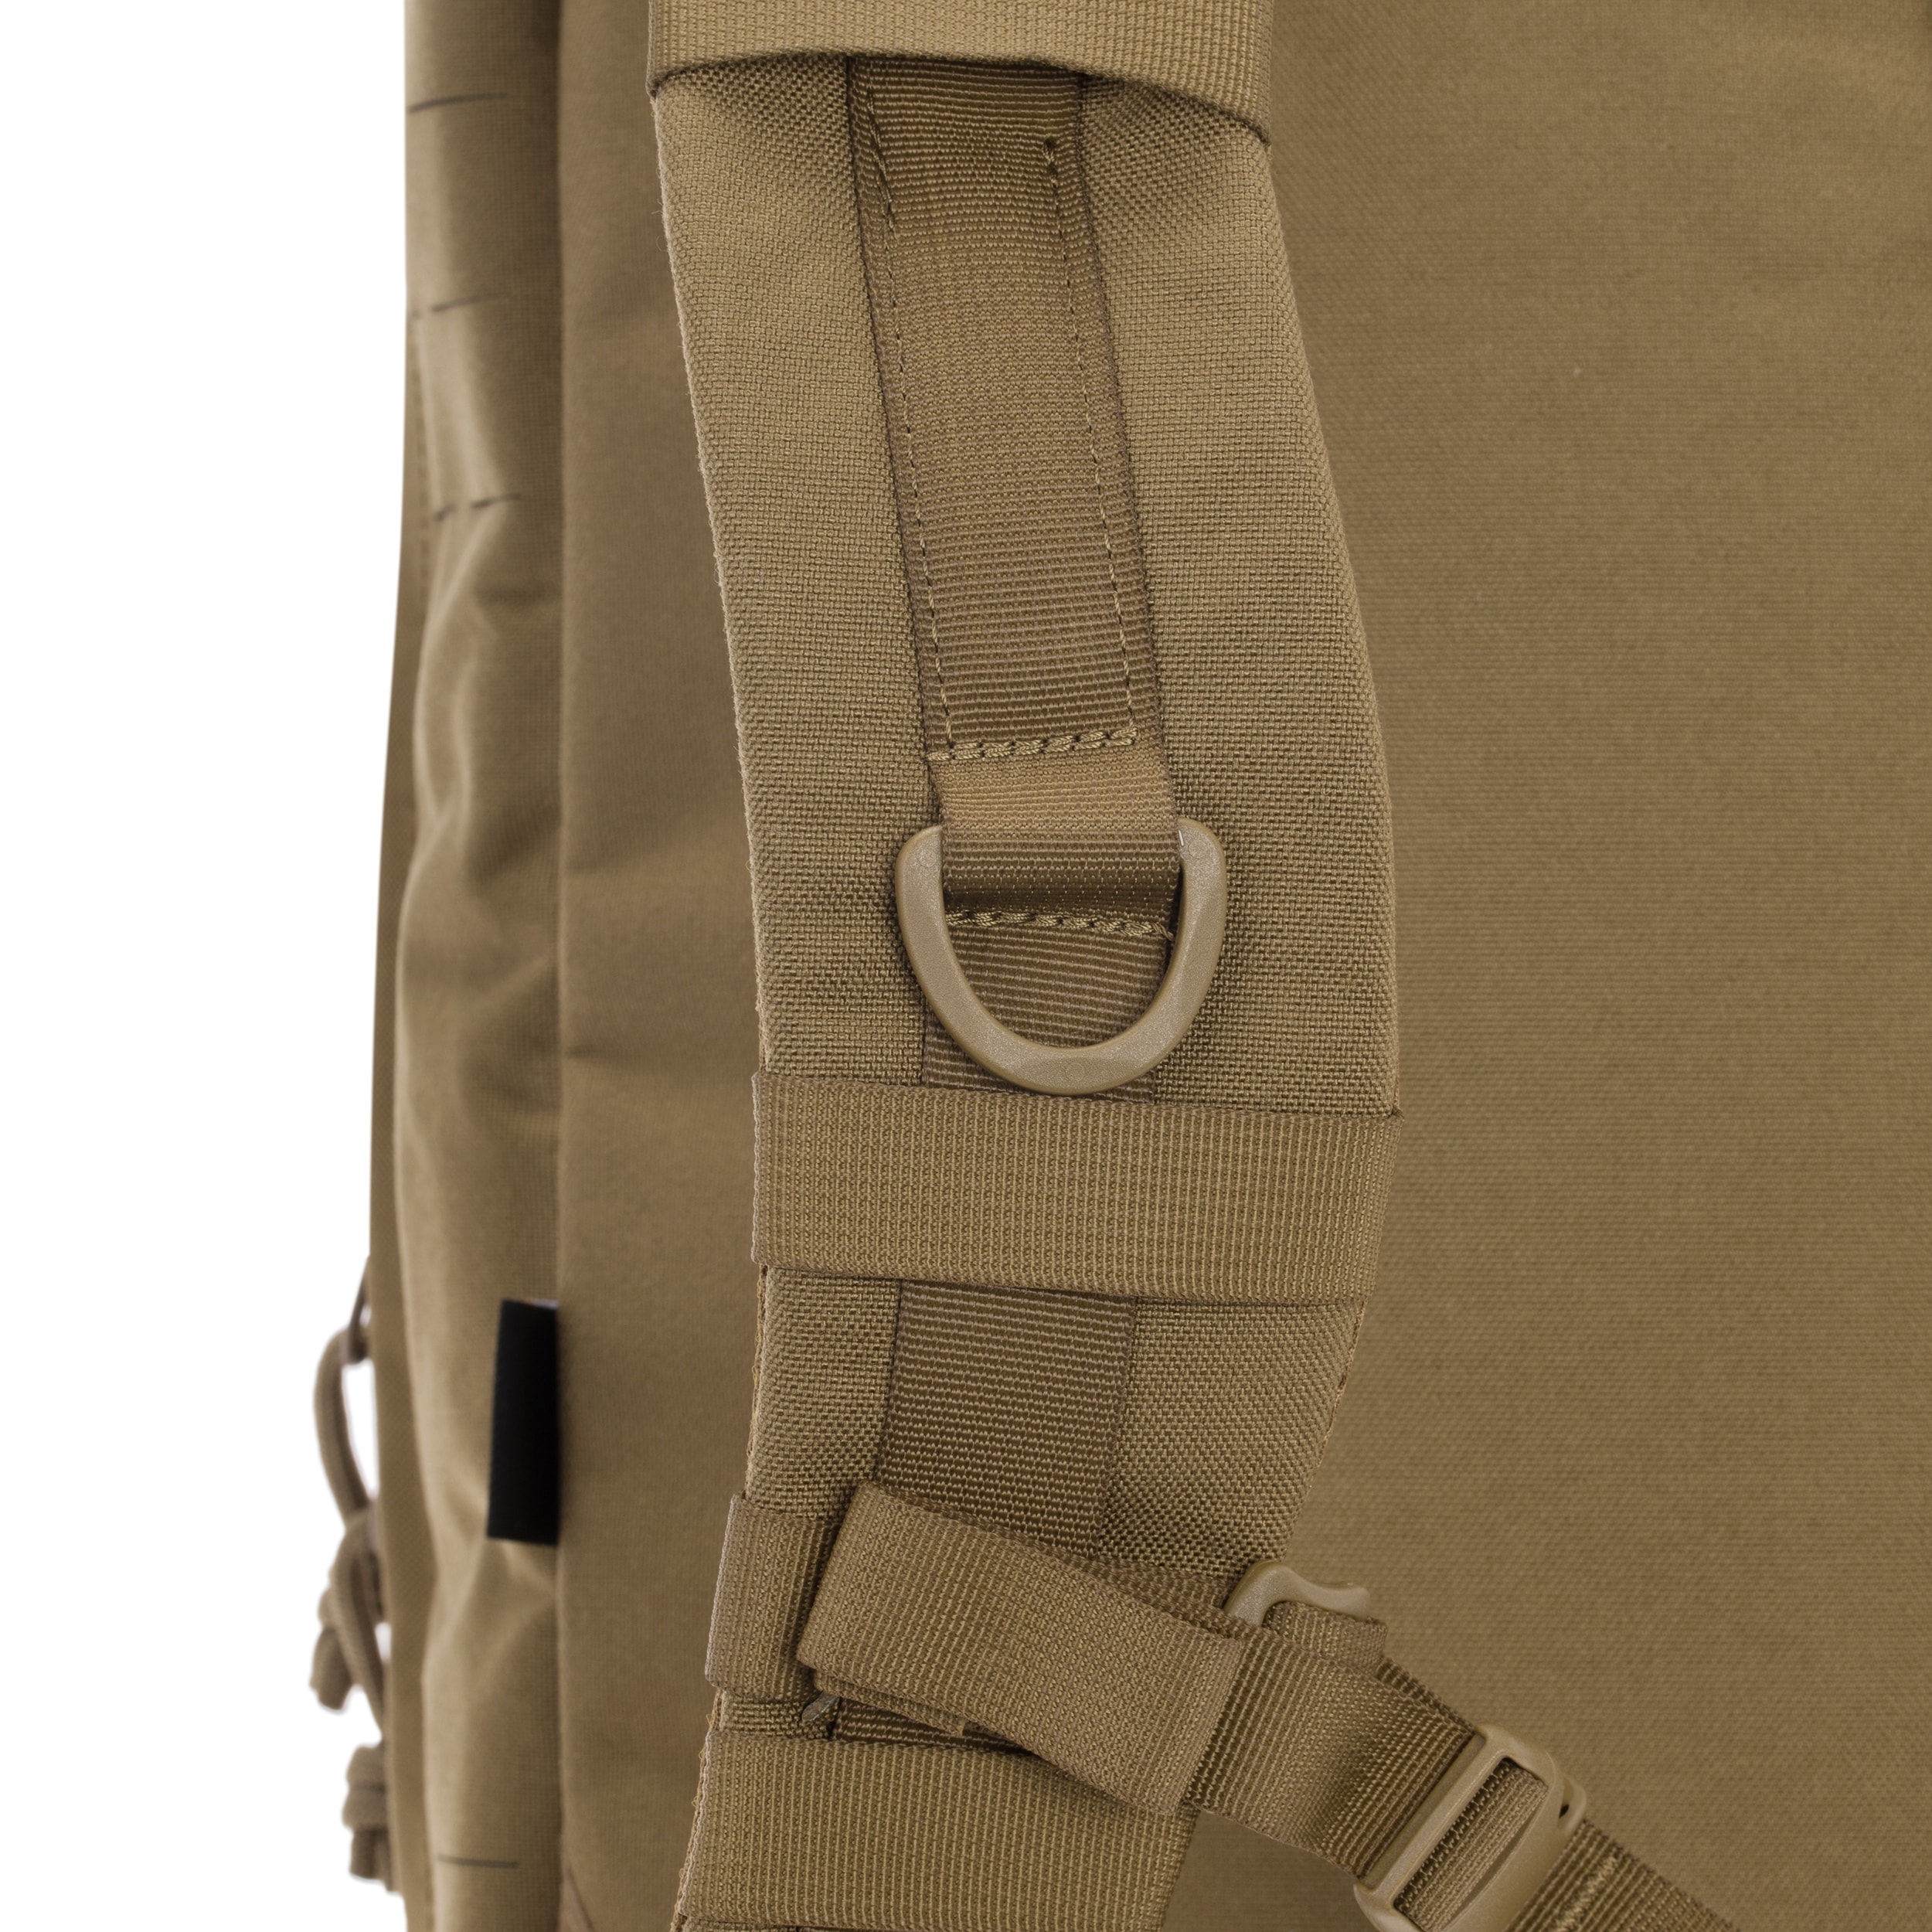 Plecak medyczny Tasmanian Tiger Medic Assault Pack L MKII 19 l - Coyote Brown